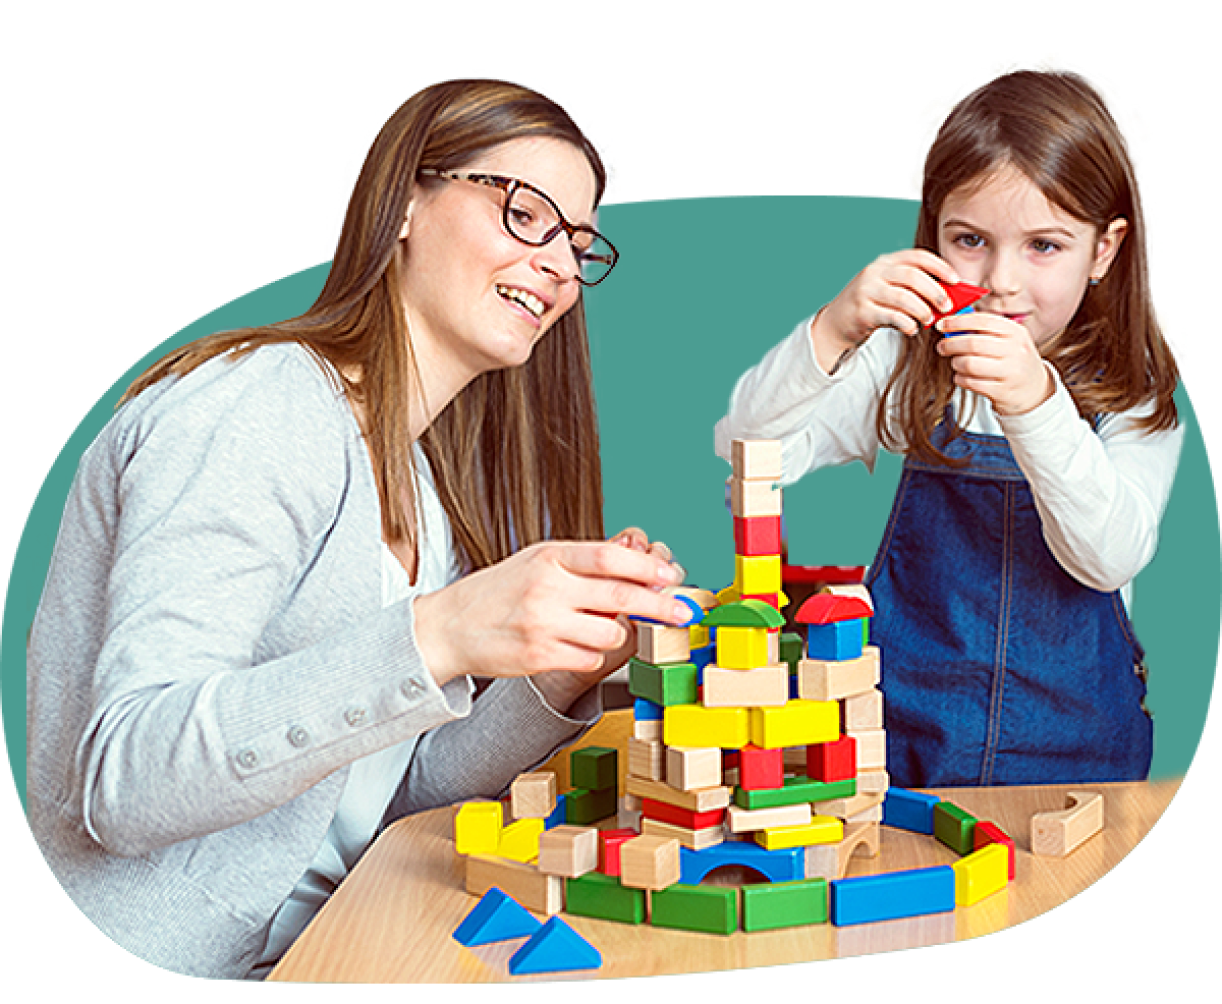 therapist helping child with blocks